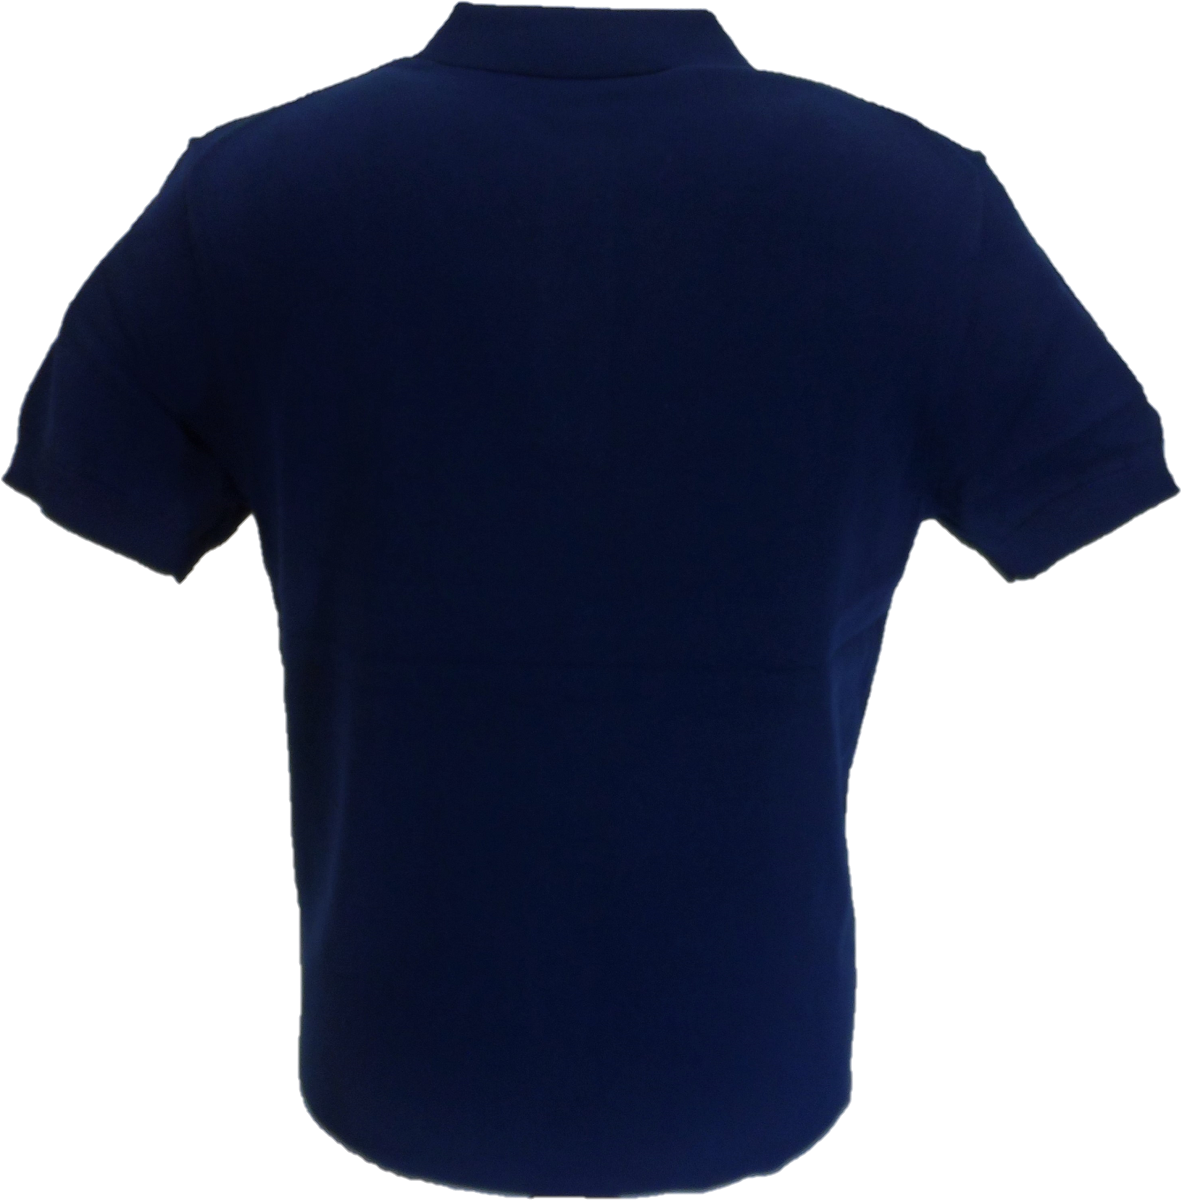 Merc Mens Derrick Navy Blue Vintage Knitted Mod Polo Shirts